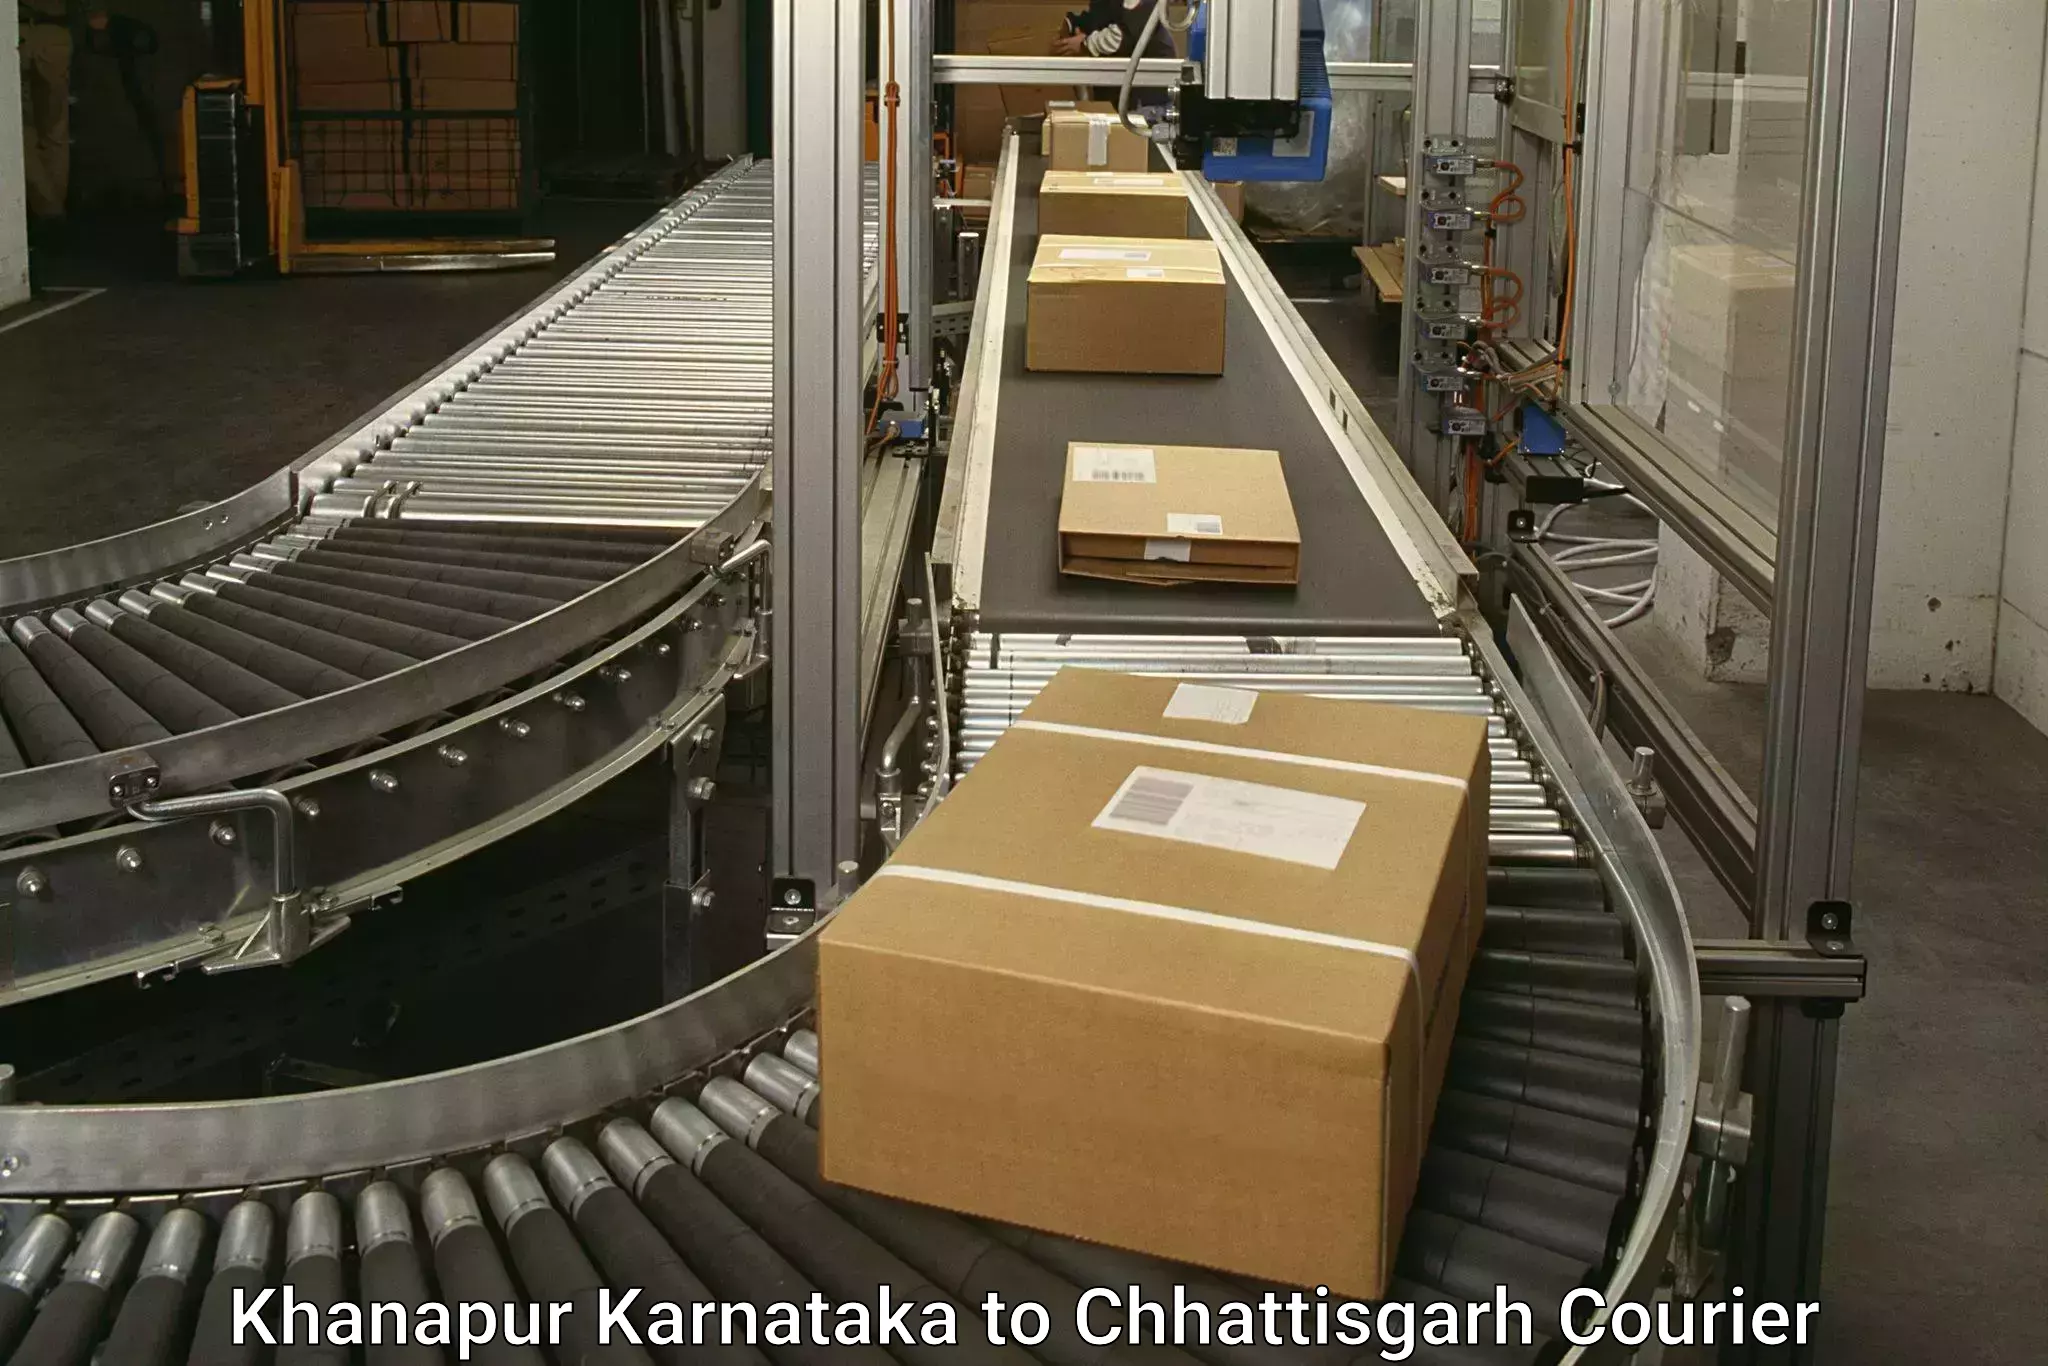 Reliable delivery network Khanapur Karnataka to Chhattisgarh